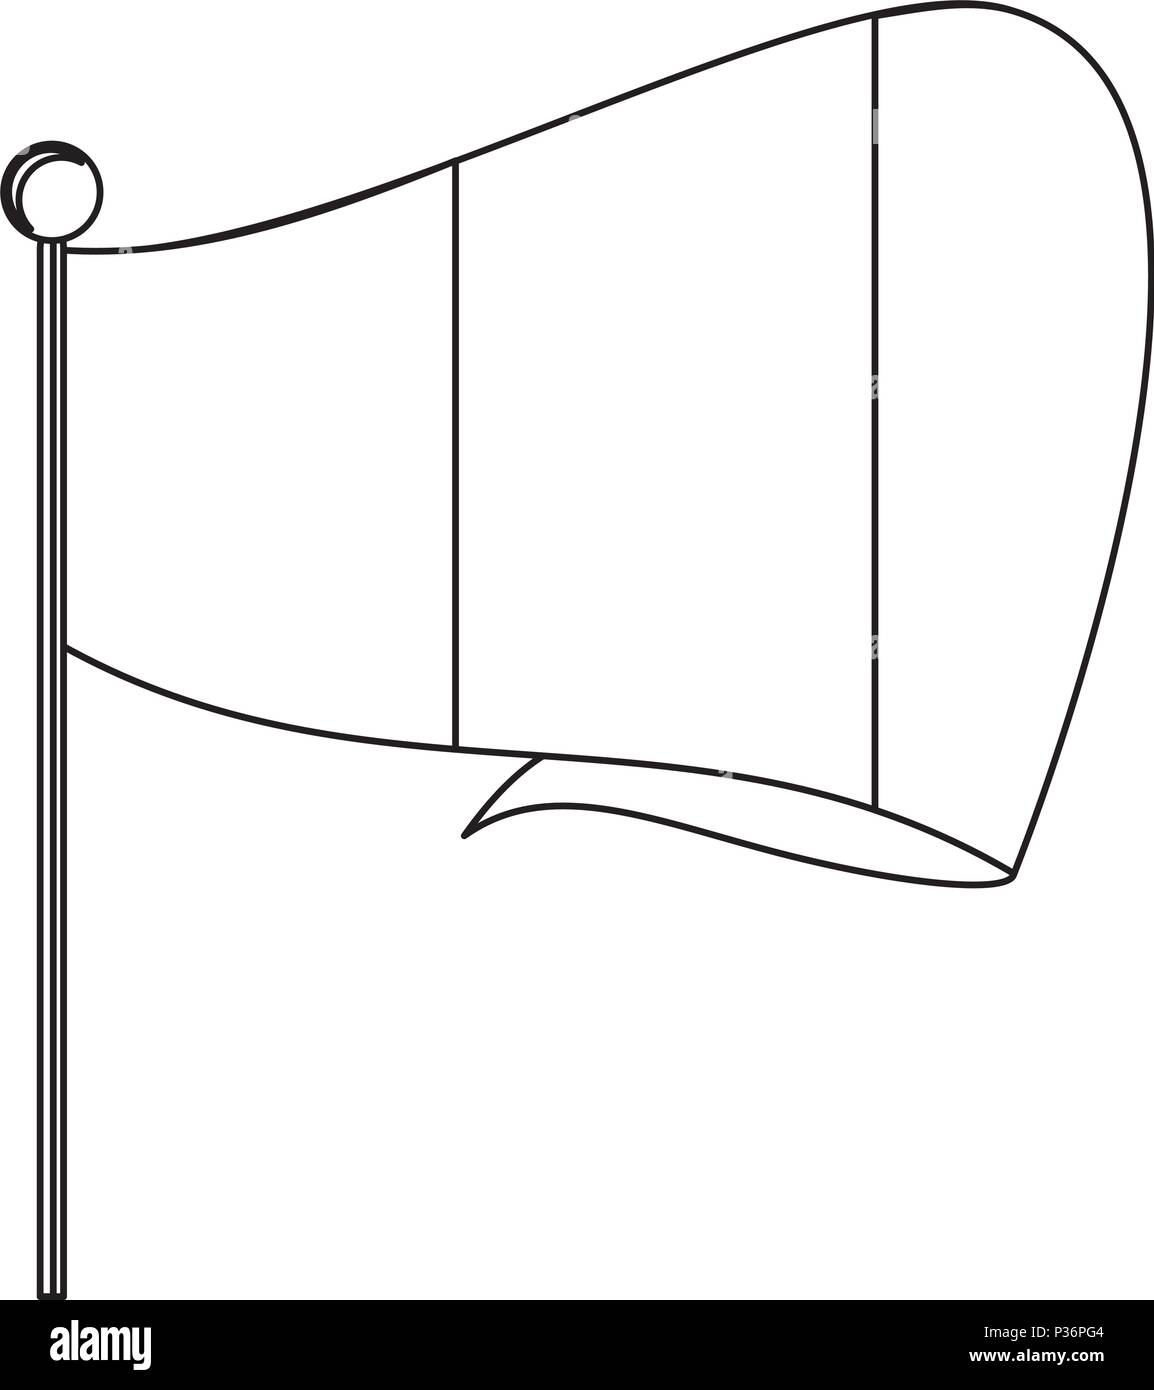 ireland flag icon over white background, vector illustration Stock Vector